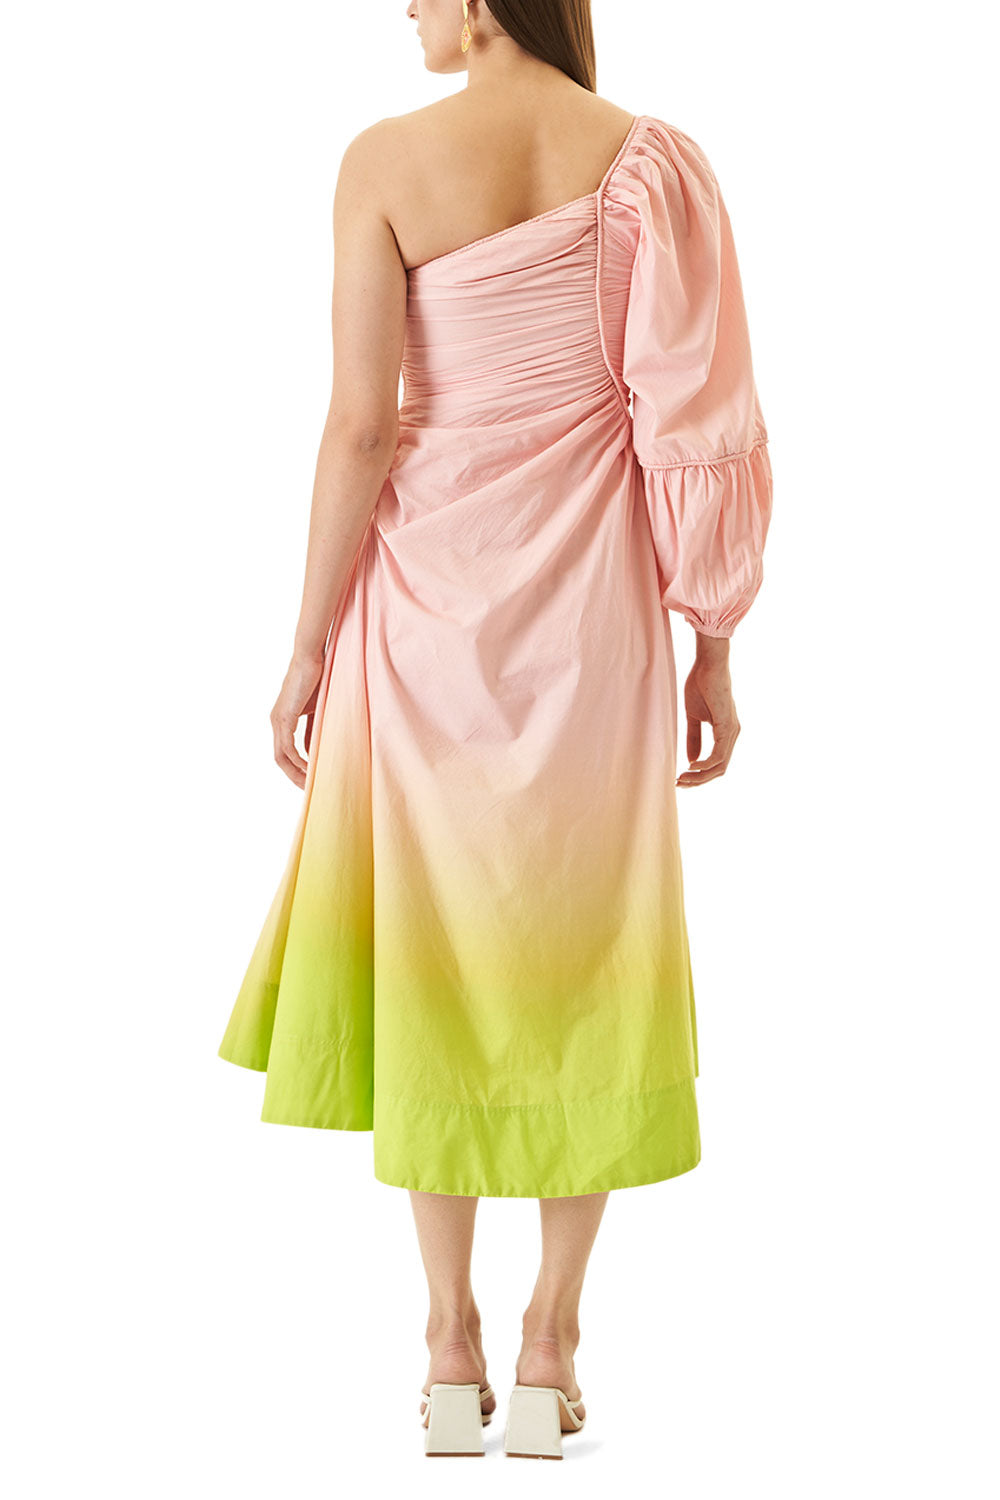 Horizon Pink Camilla Dress